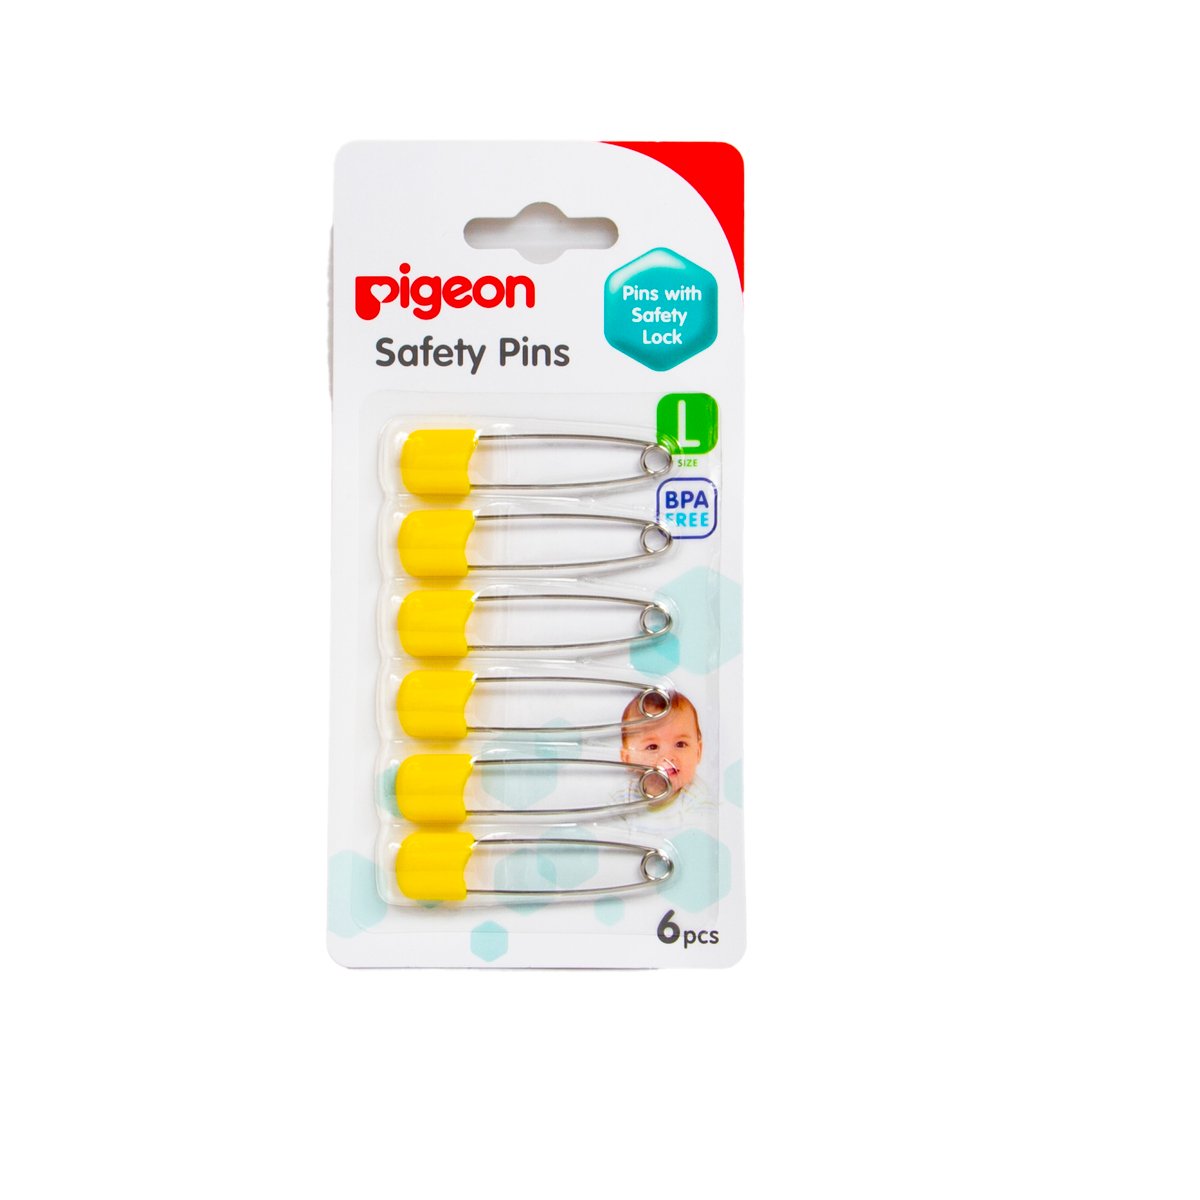 Pigeon Safety Pins 6 pcs